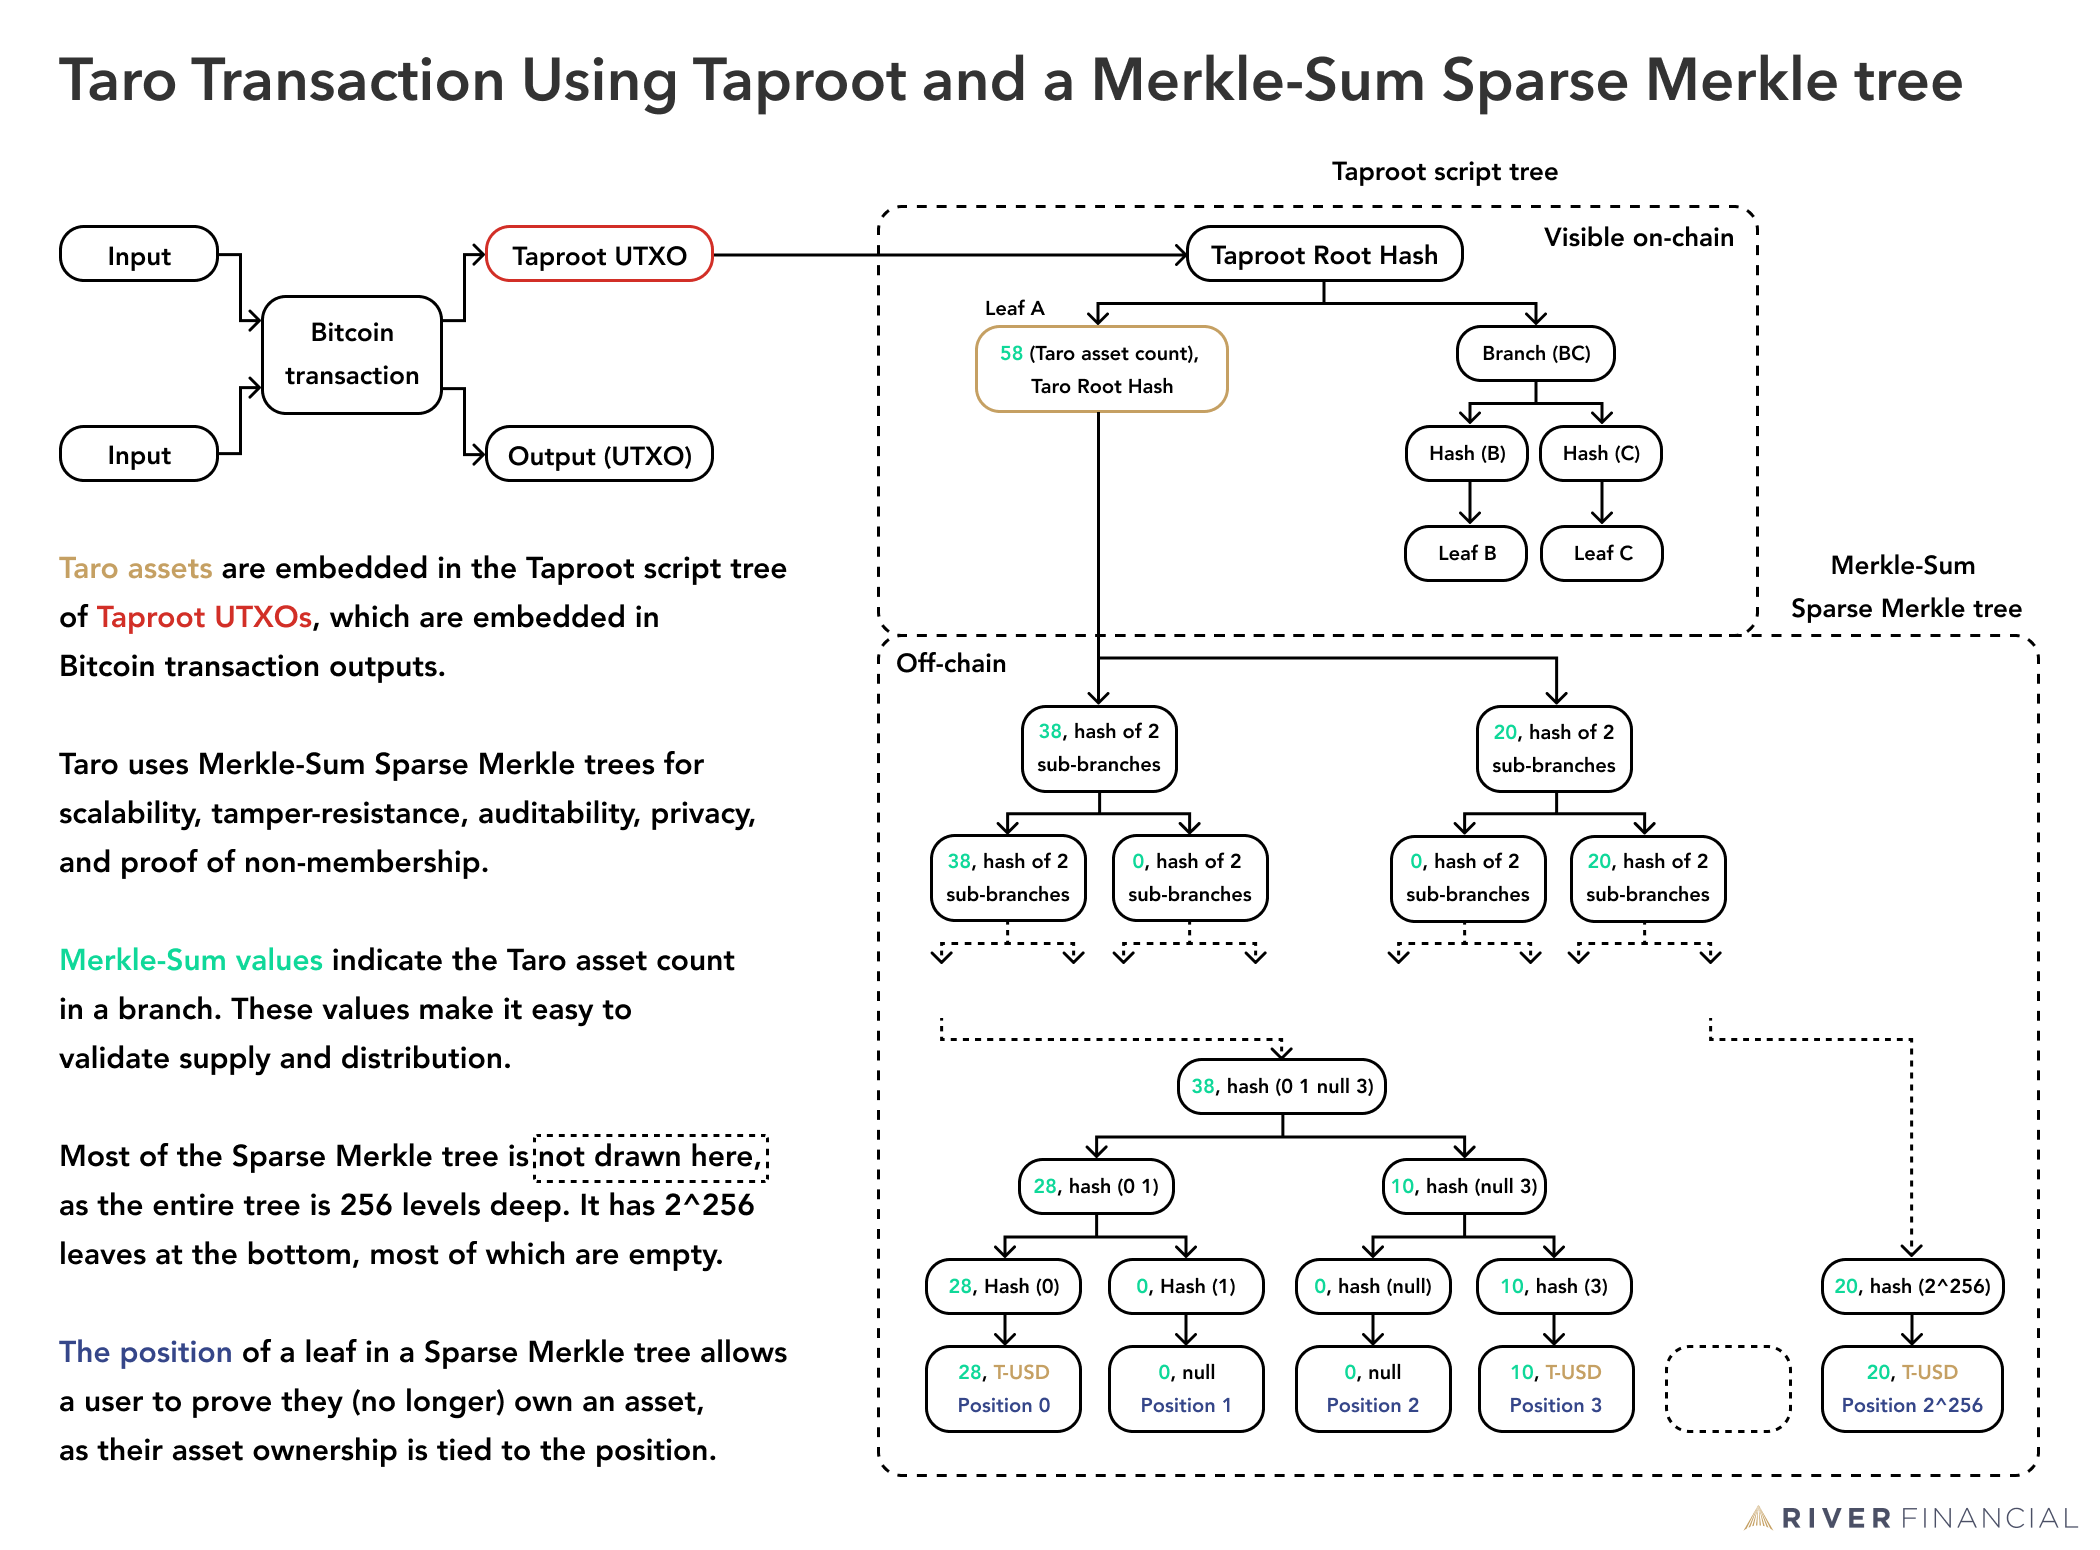 Merkle-Sum Sparse Merkle tree